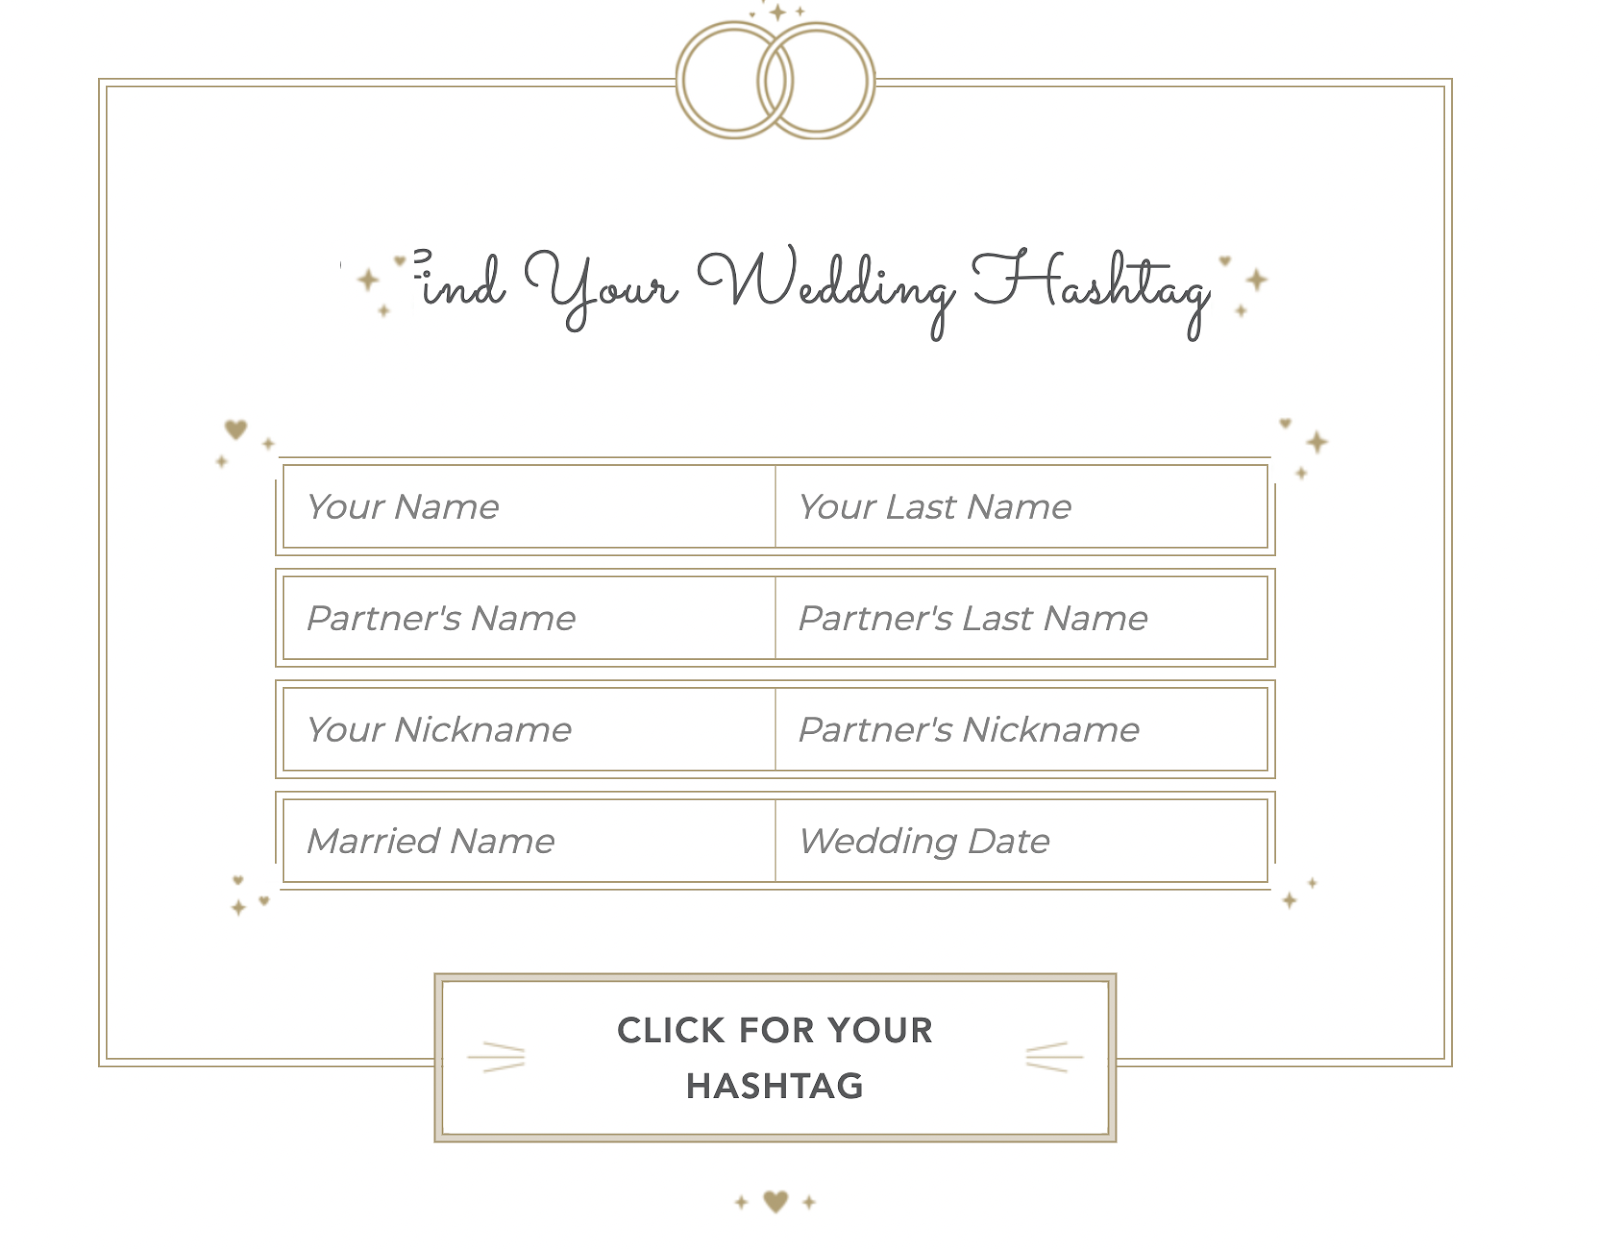 Shutterfly’s wedding hashtag generator